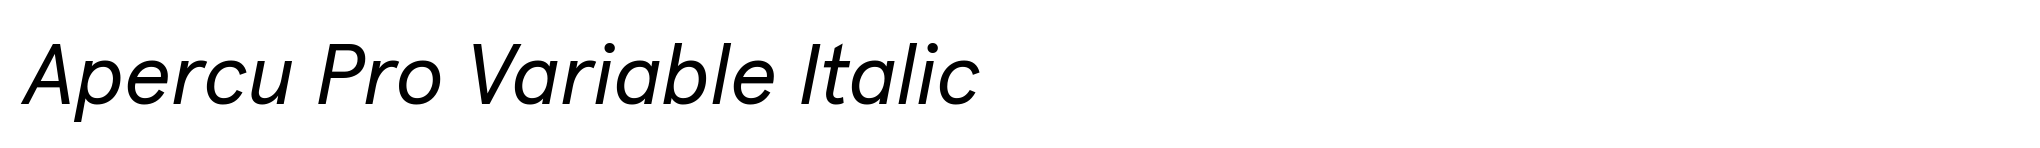 Apercu Pro Variable Italic image